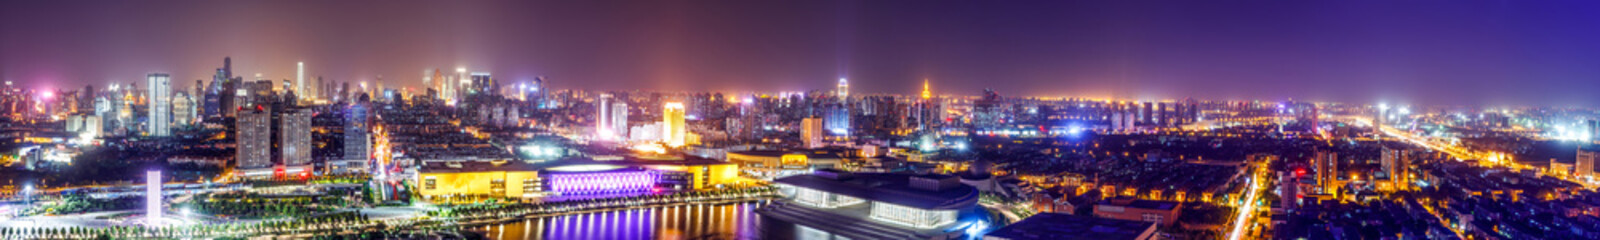 Panoramic illuminated skyline and cityscape